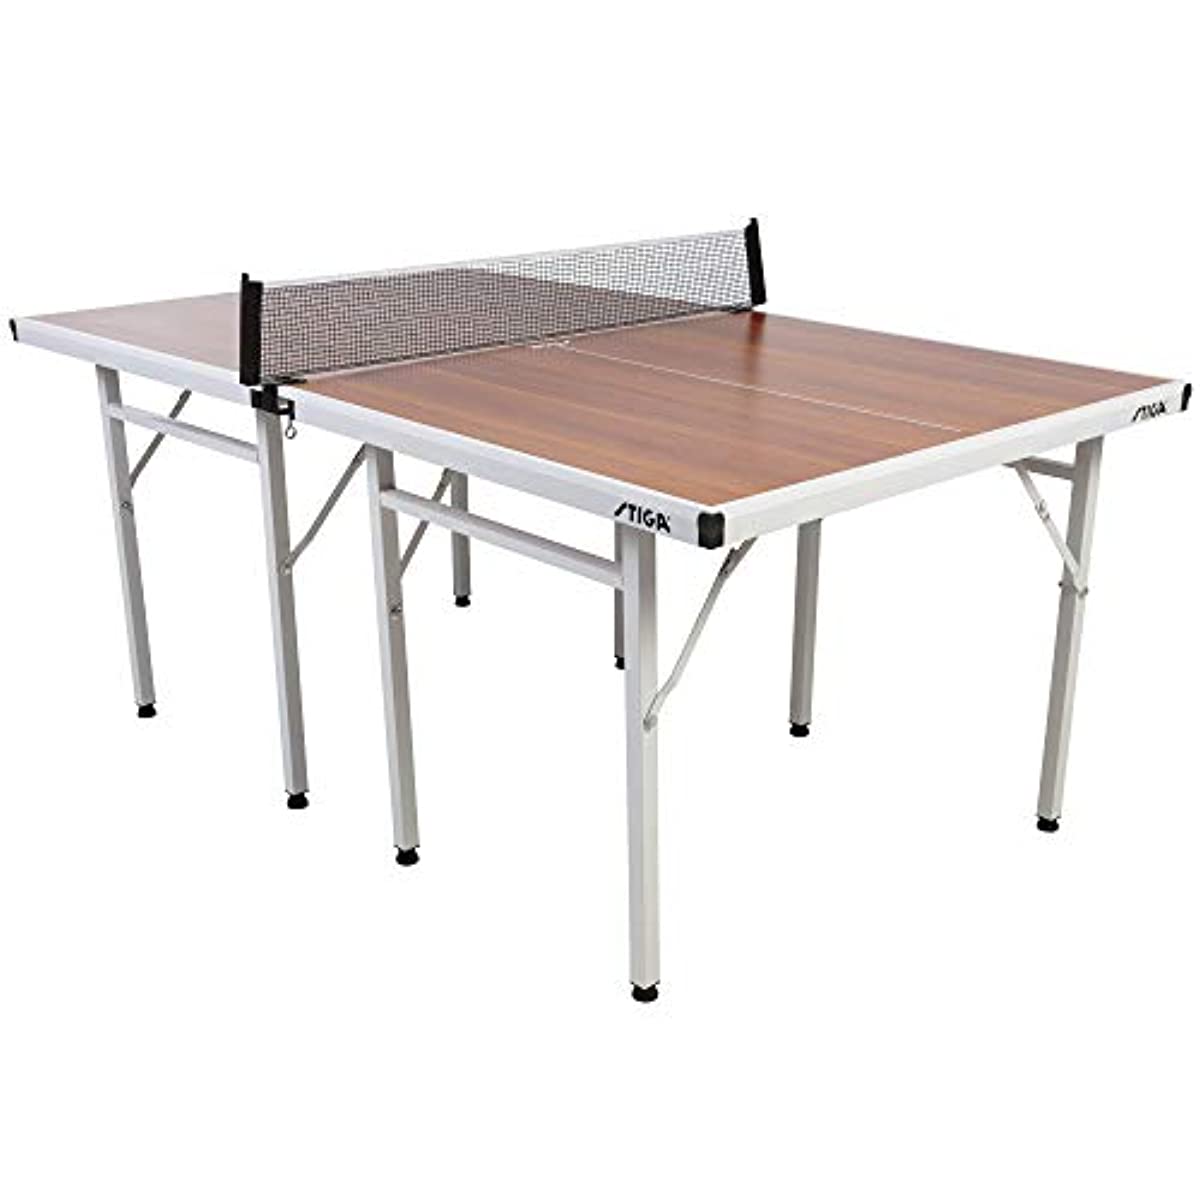 T8460-2w Space Saver Table Tennis Table, Brown - Woodgrain